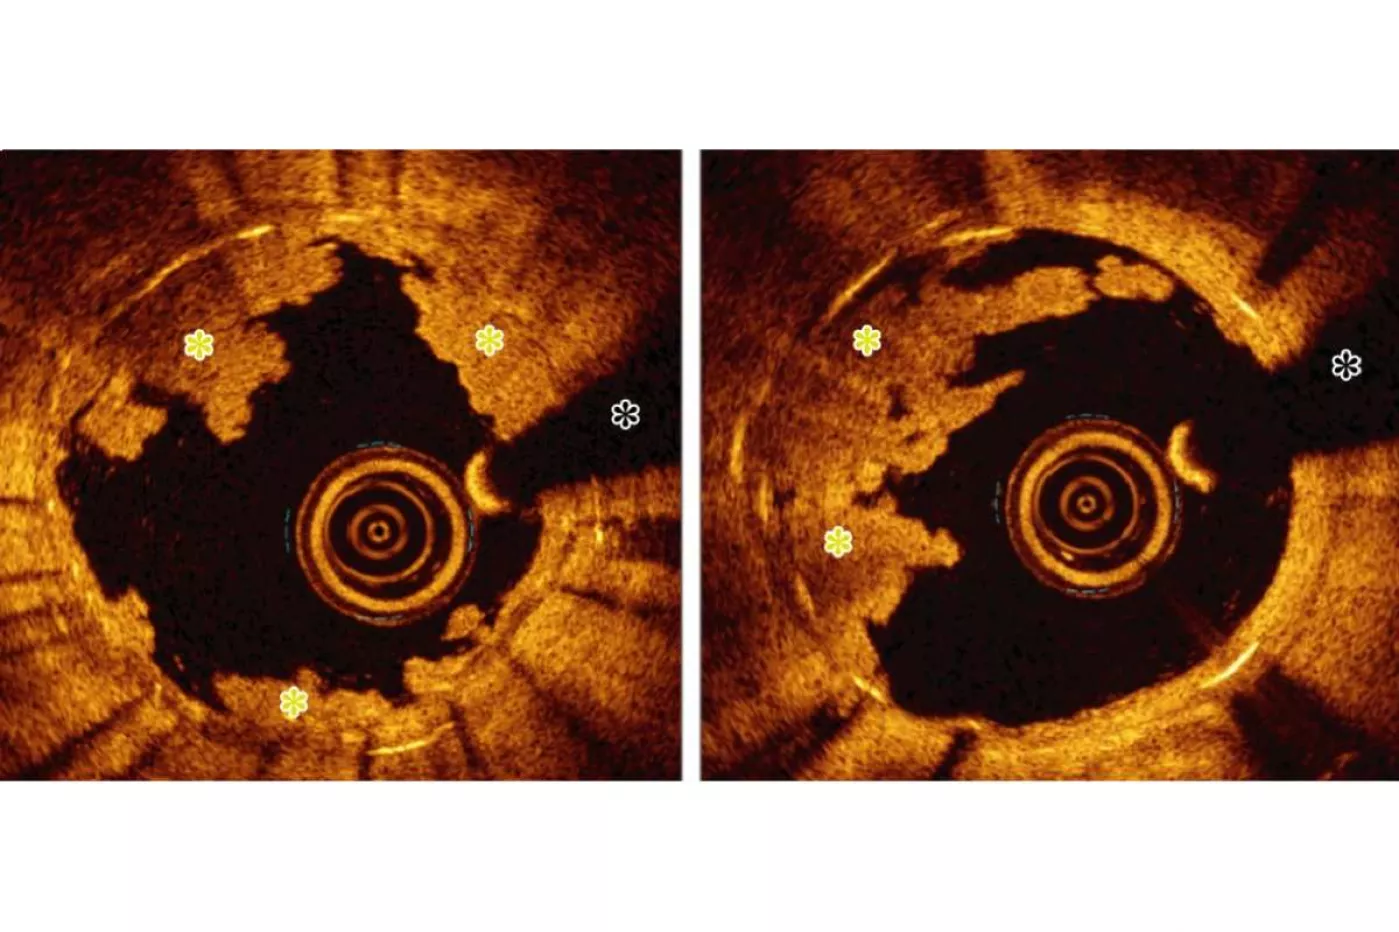 Tomografia por coherencia óptica (OTC) que muestra la trombosis del stent.